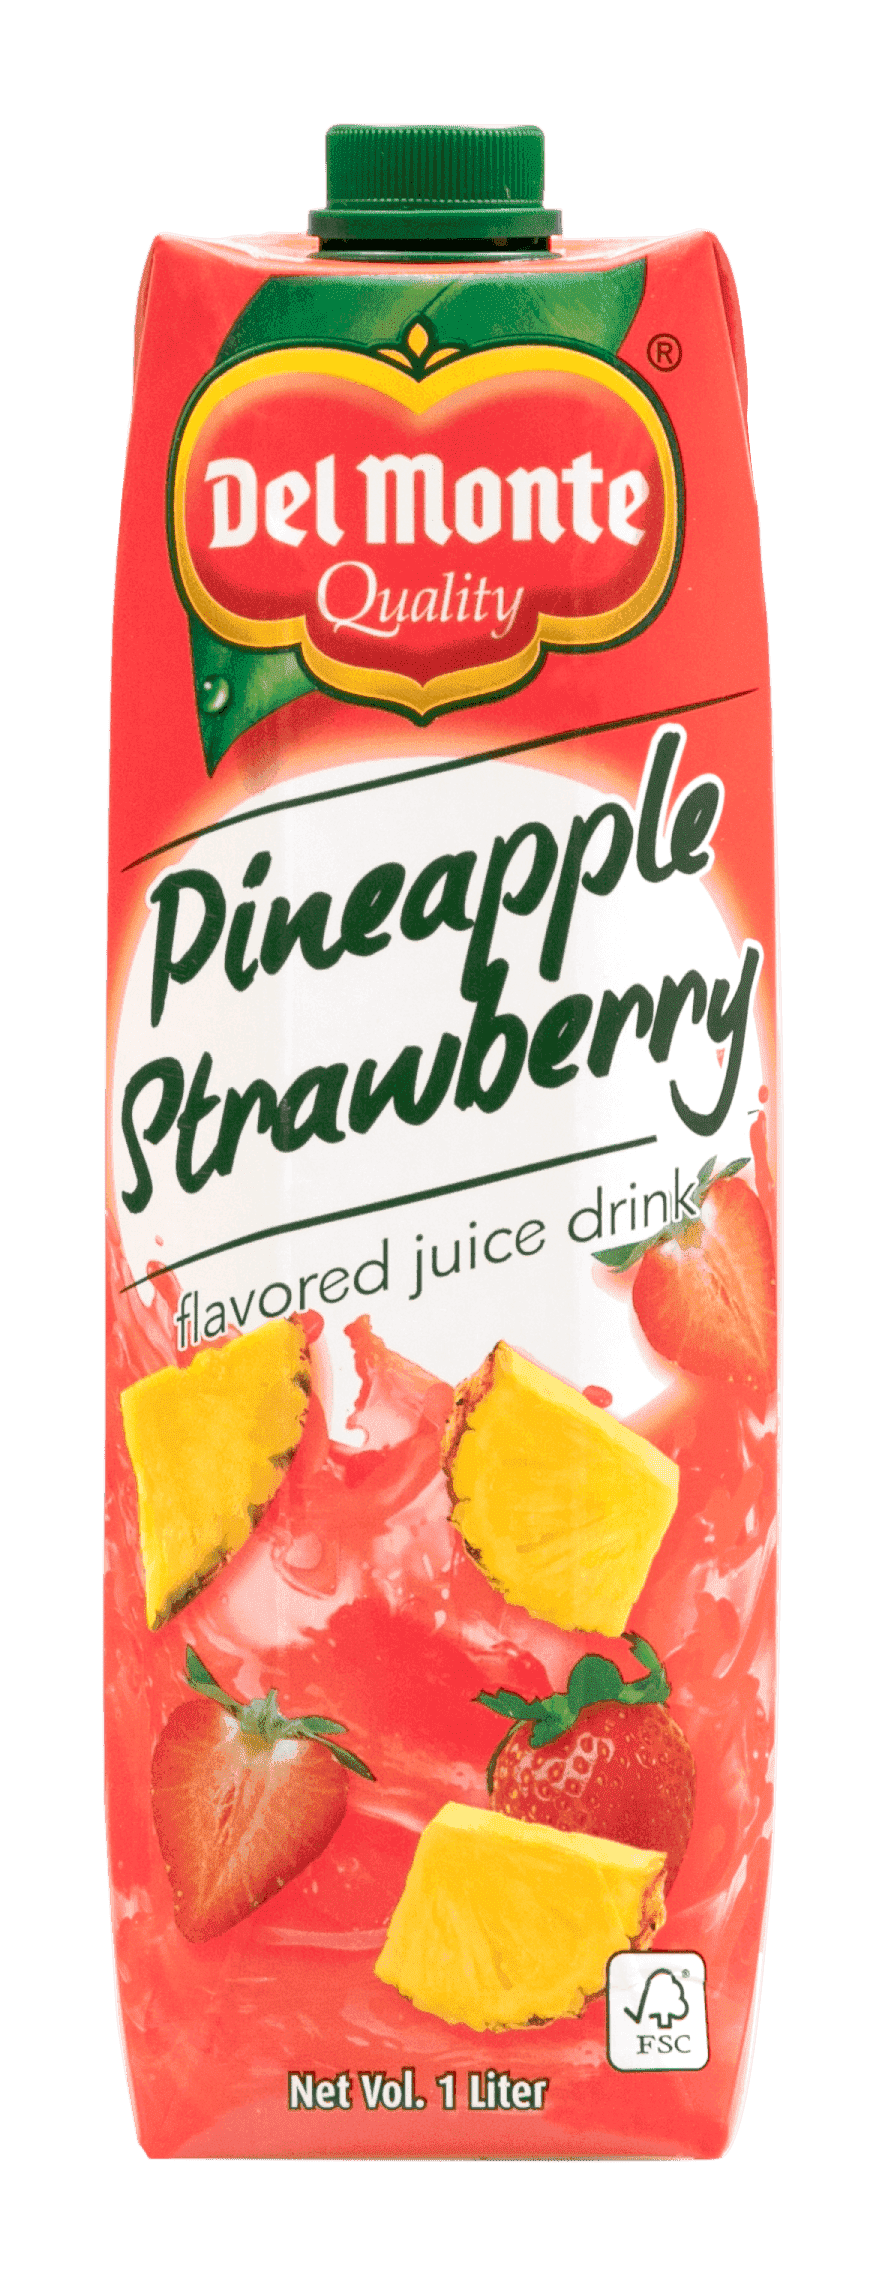 Del Monte Pineapple Strawberry Juice Drink